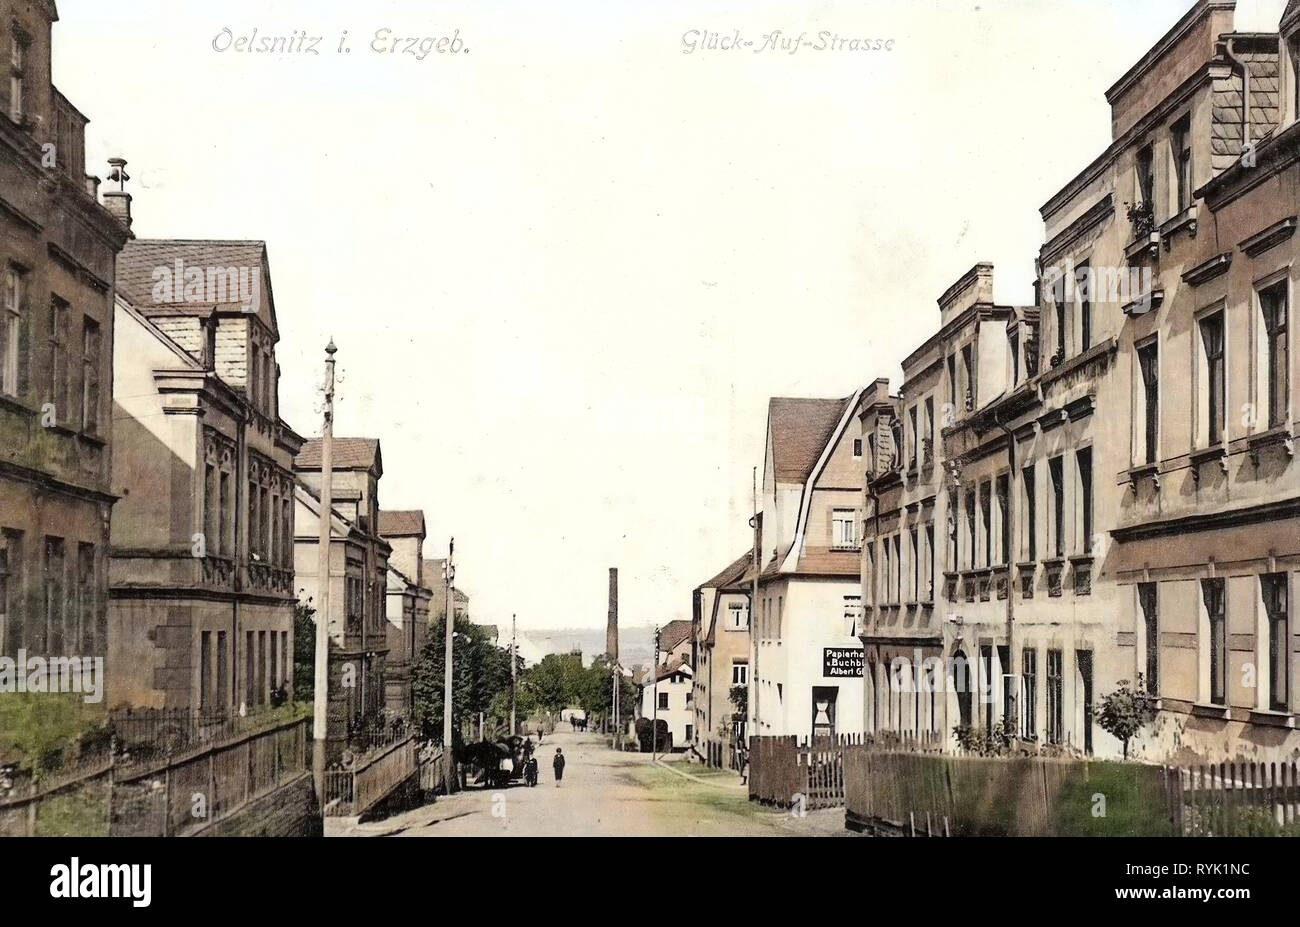 Buildings in Oelsnitz/Erzgeb., 1913, Erzgebirgskreis, Oelsnitz, Glück, Auf, Straße, Germany Stock Photo